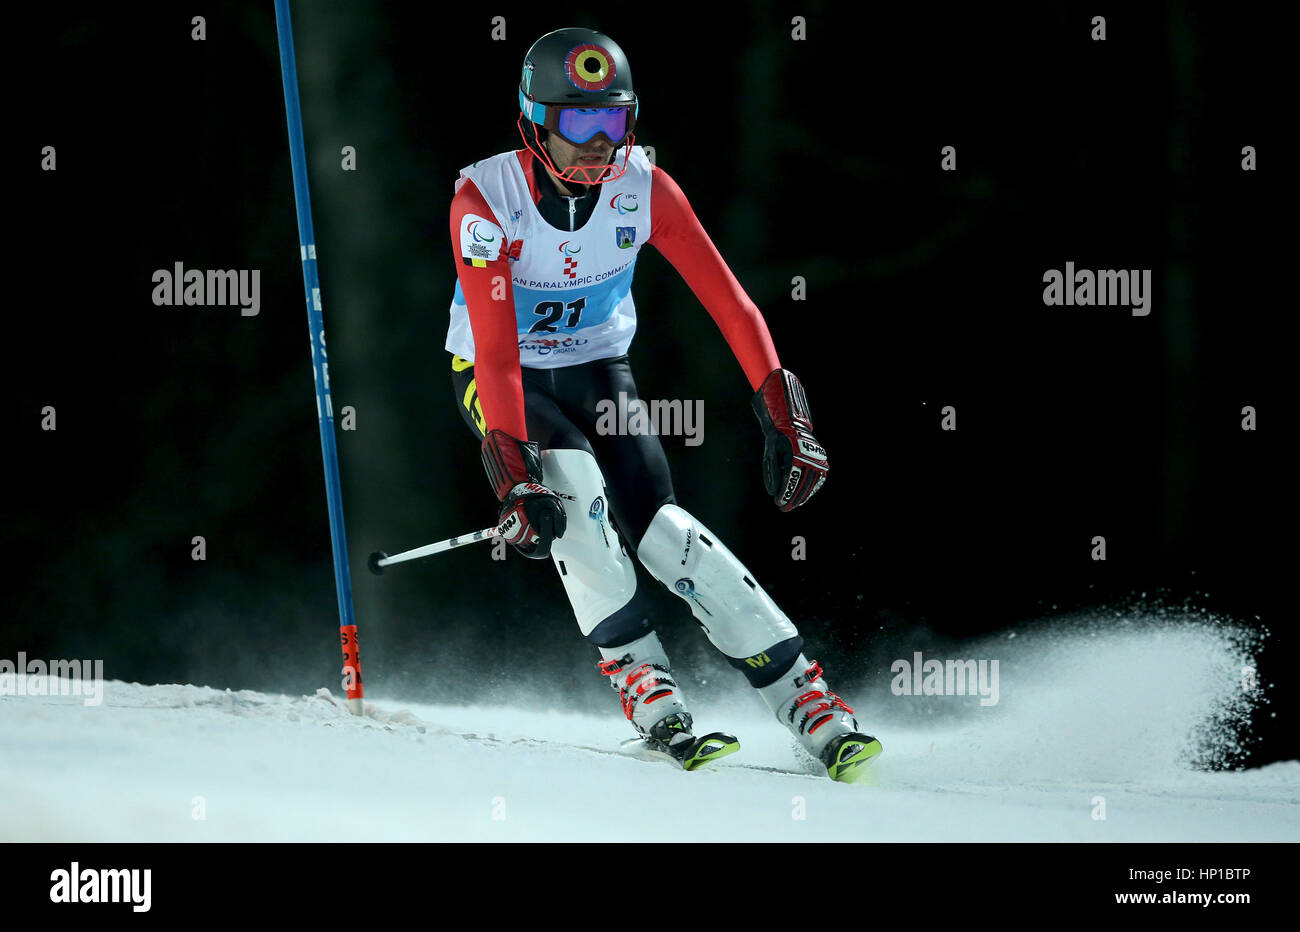 Zagreb, Croatia. 16th Feb, 2017. Belgian Para alpine skier Remi Mazi competes during 2nd slalom race of Men's Standing Slalom at 2016-2017 IPC Alpine Skiing Europa Cup at Sljeme in Zagreb, capital of Croatia, Feb. 16, 2017. Credit: Igor Kralj/Xinhua/Alamy Live News Stock Photo